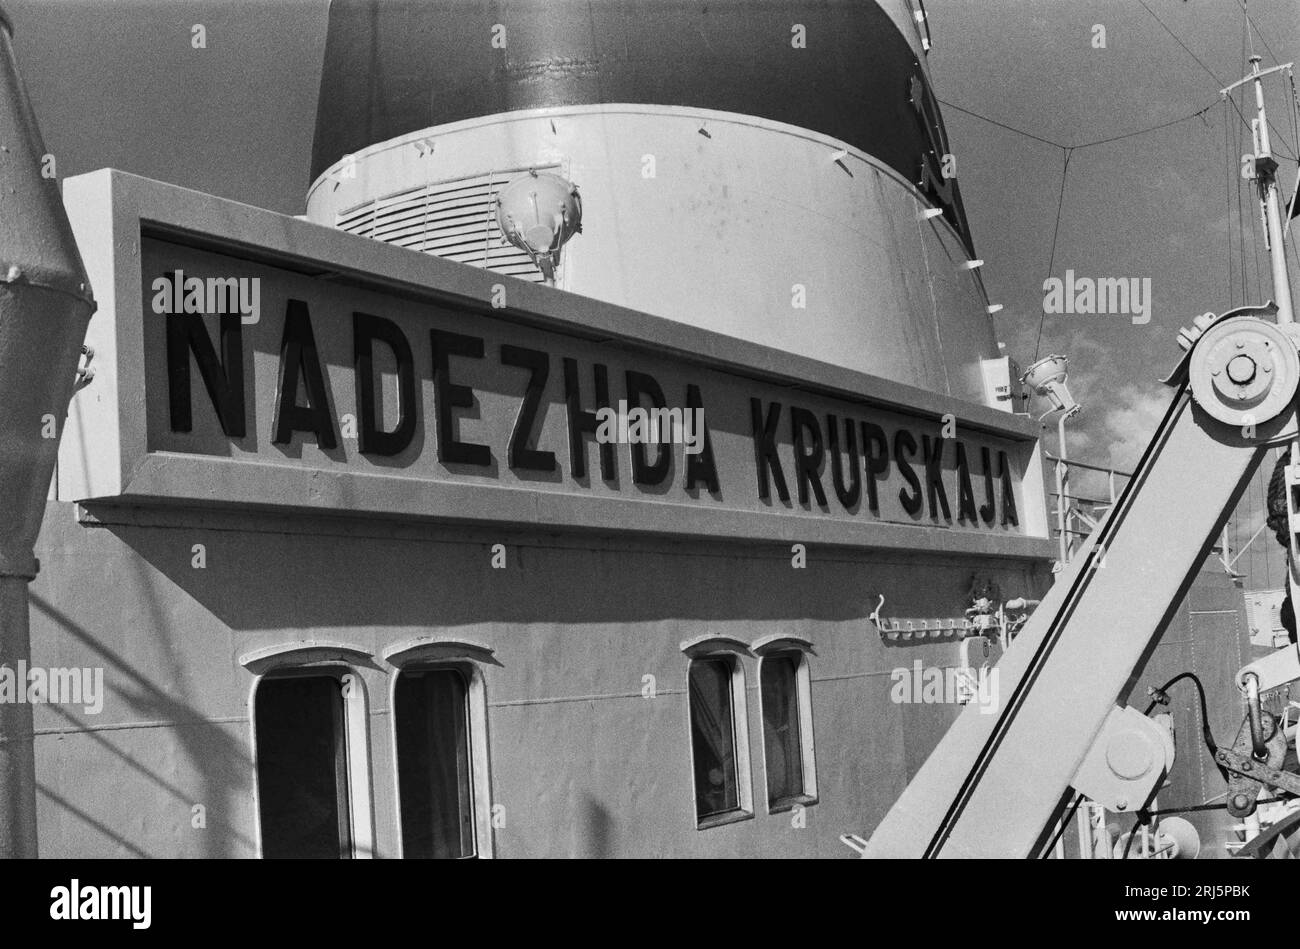 MV Nadezhda Krupskaya 1973 Banque D'Images